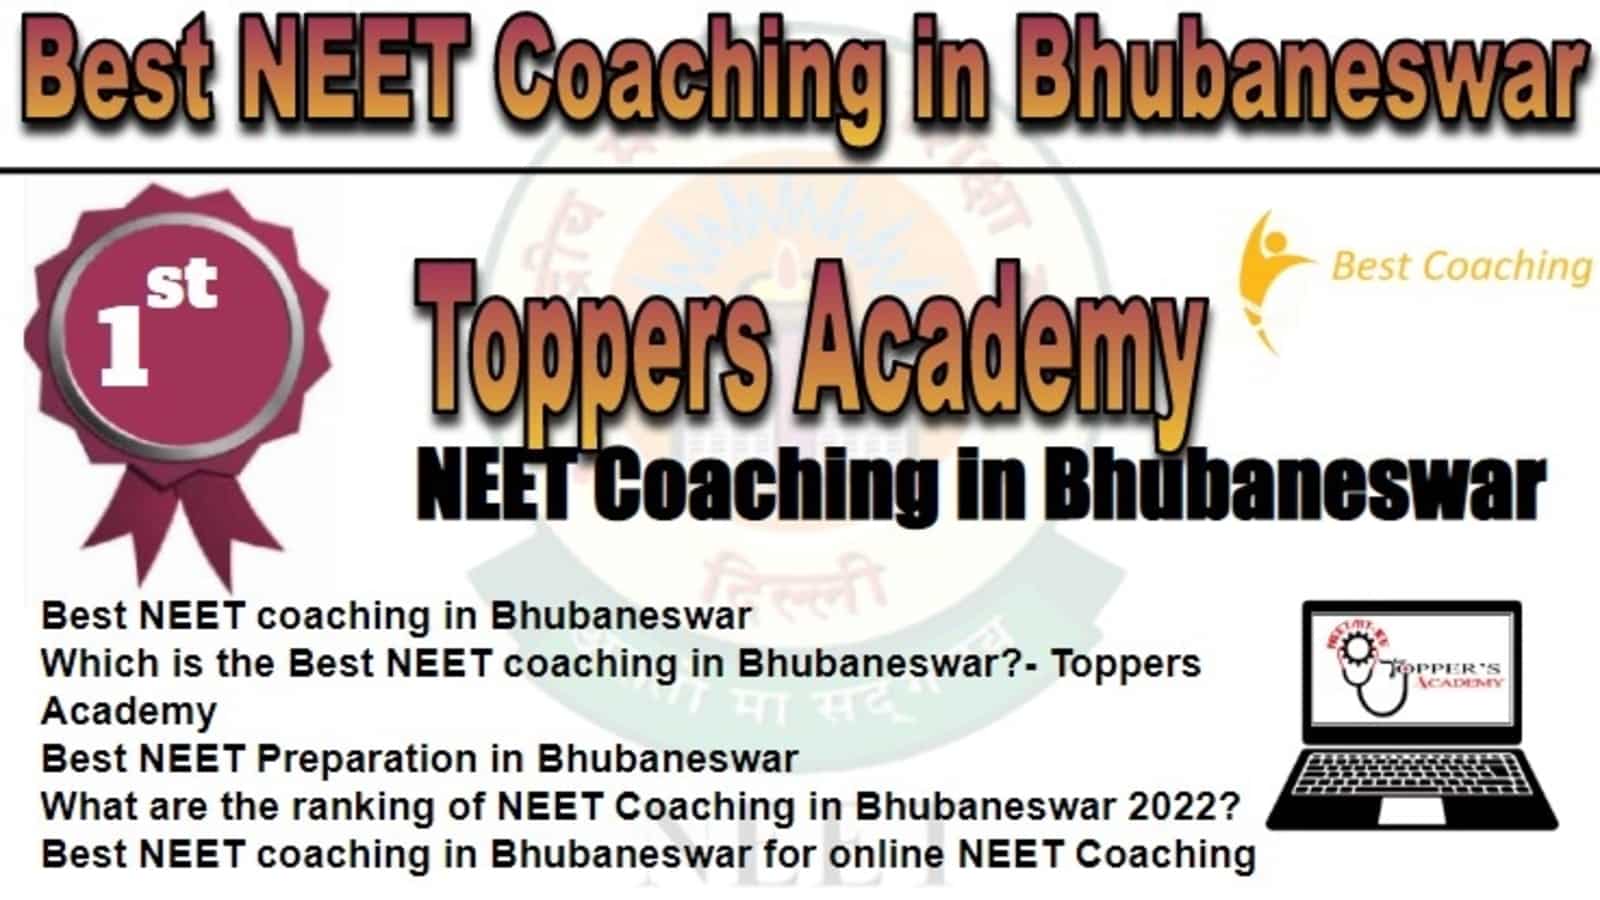 Rank 1 Best NEET Coaching in Bhubaneswar